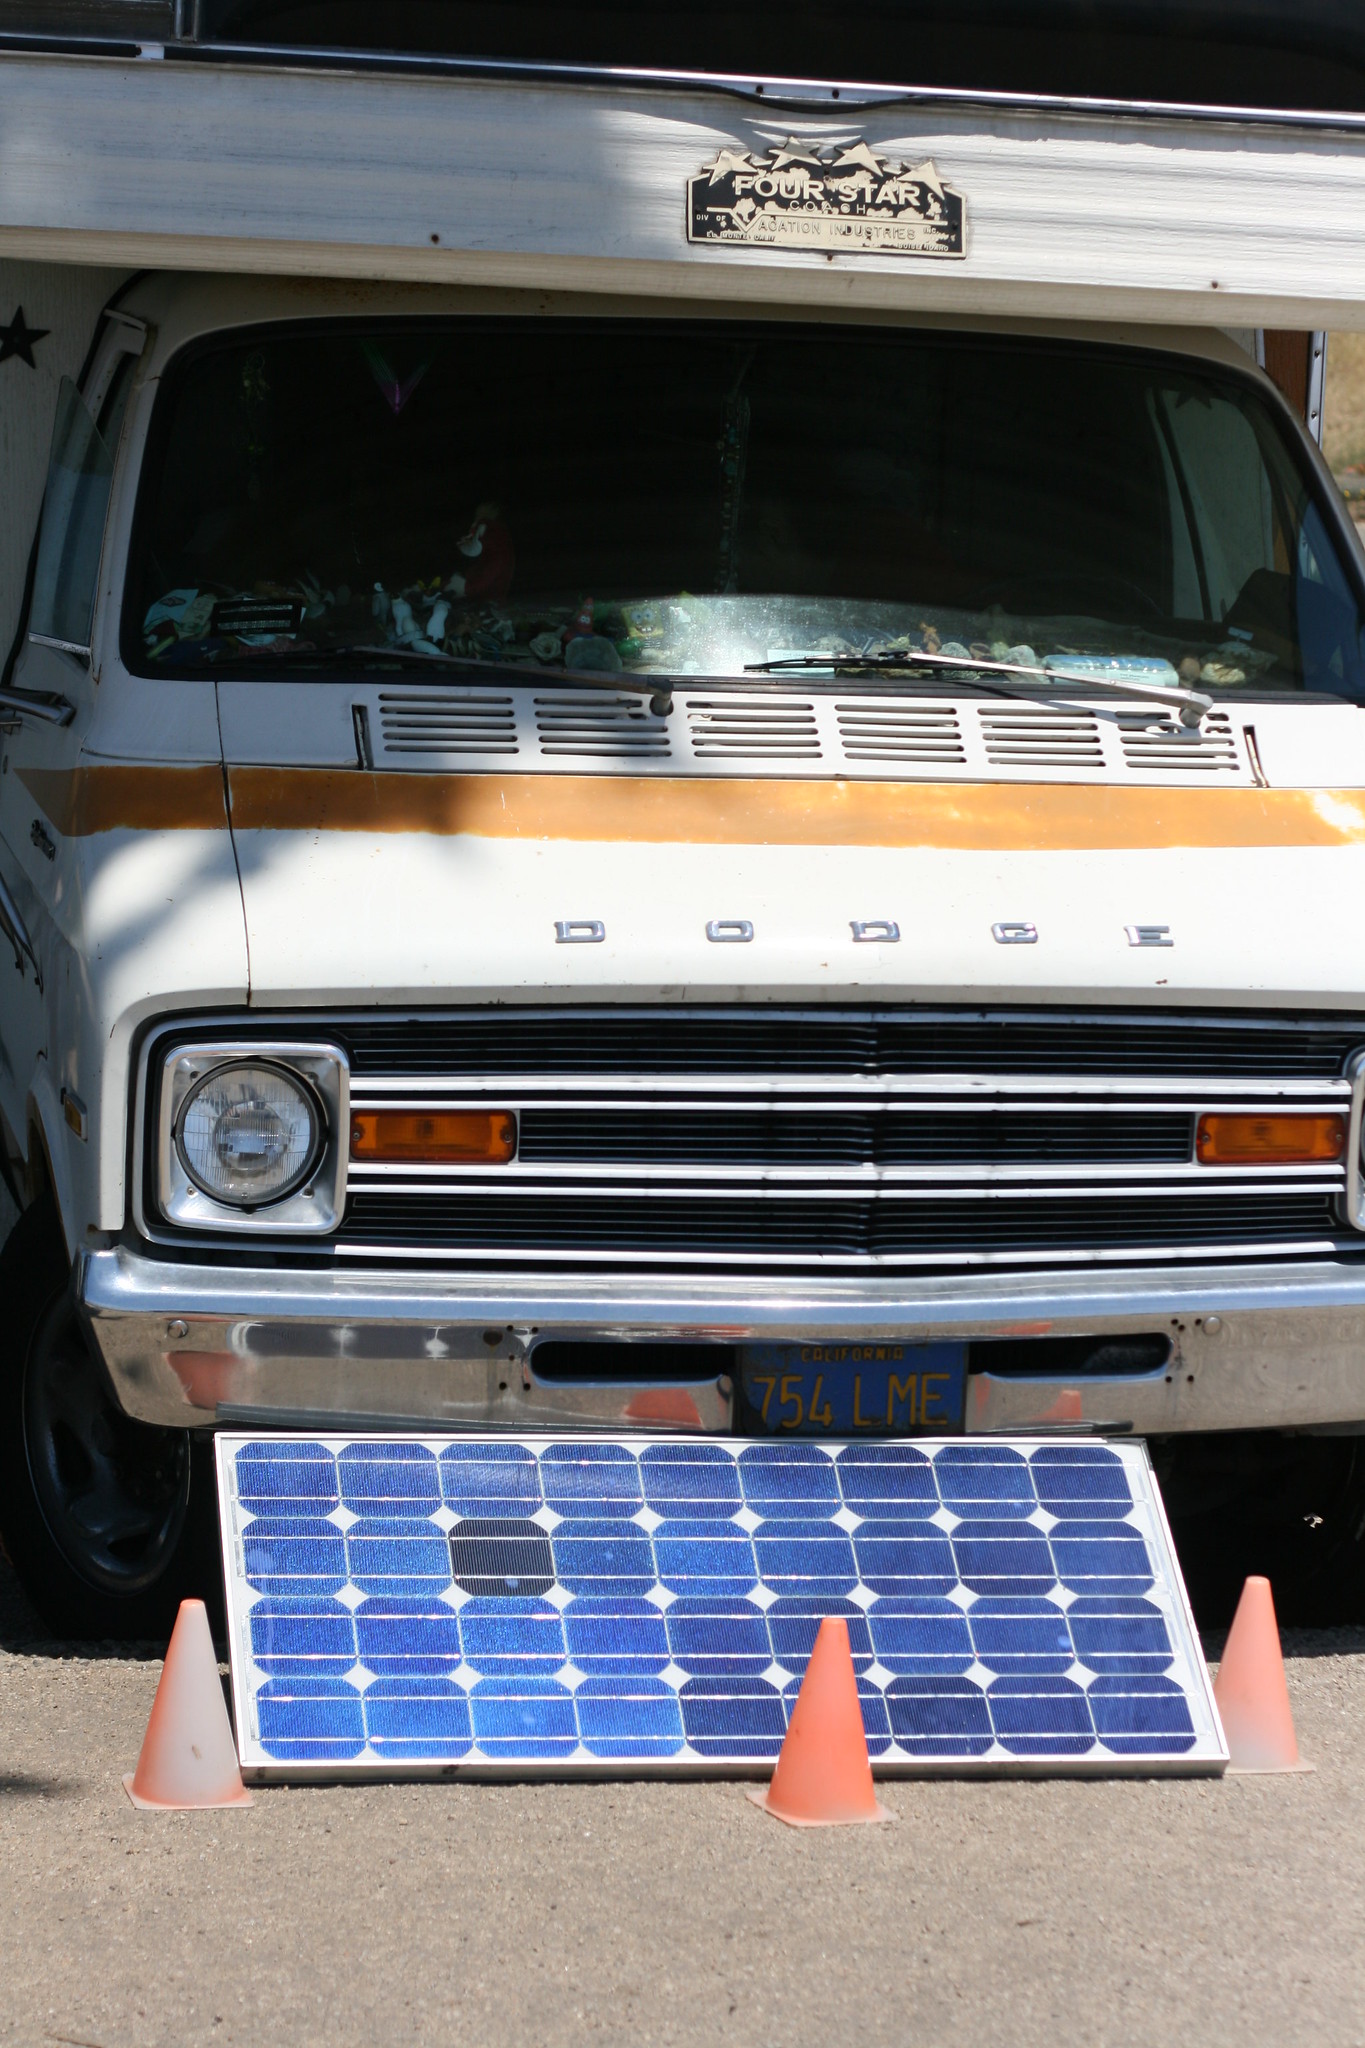 RV and solar panel